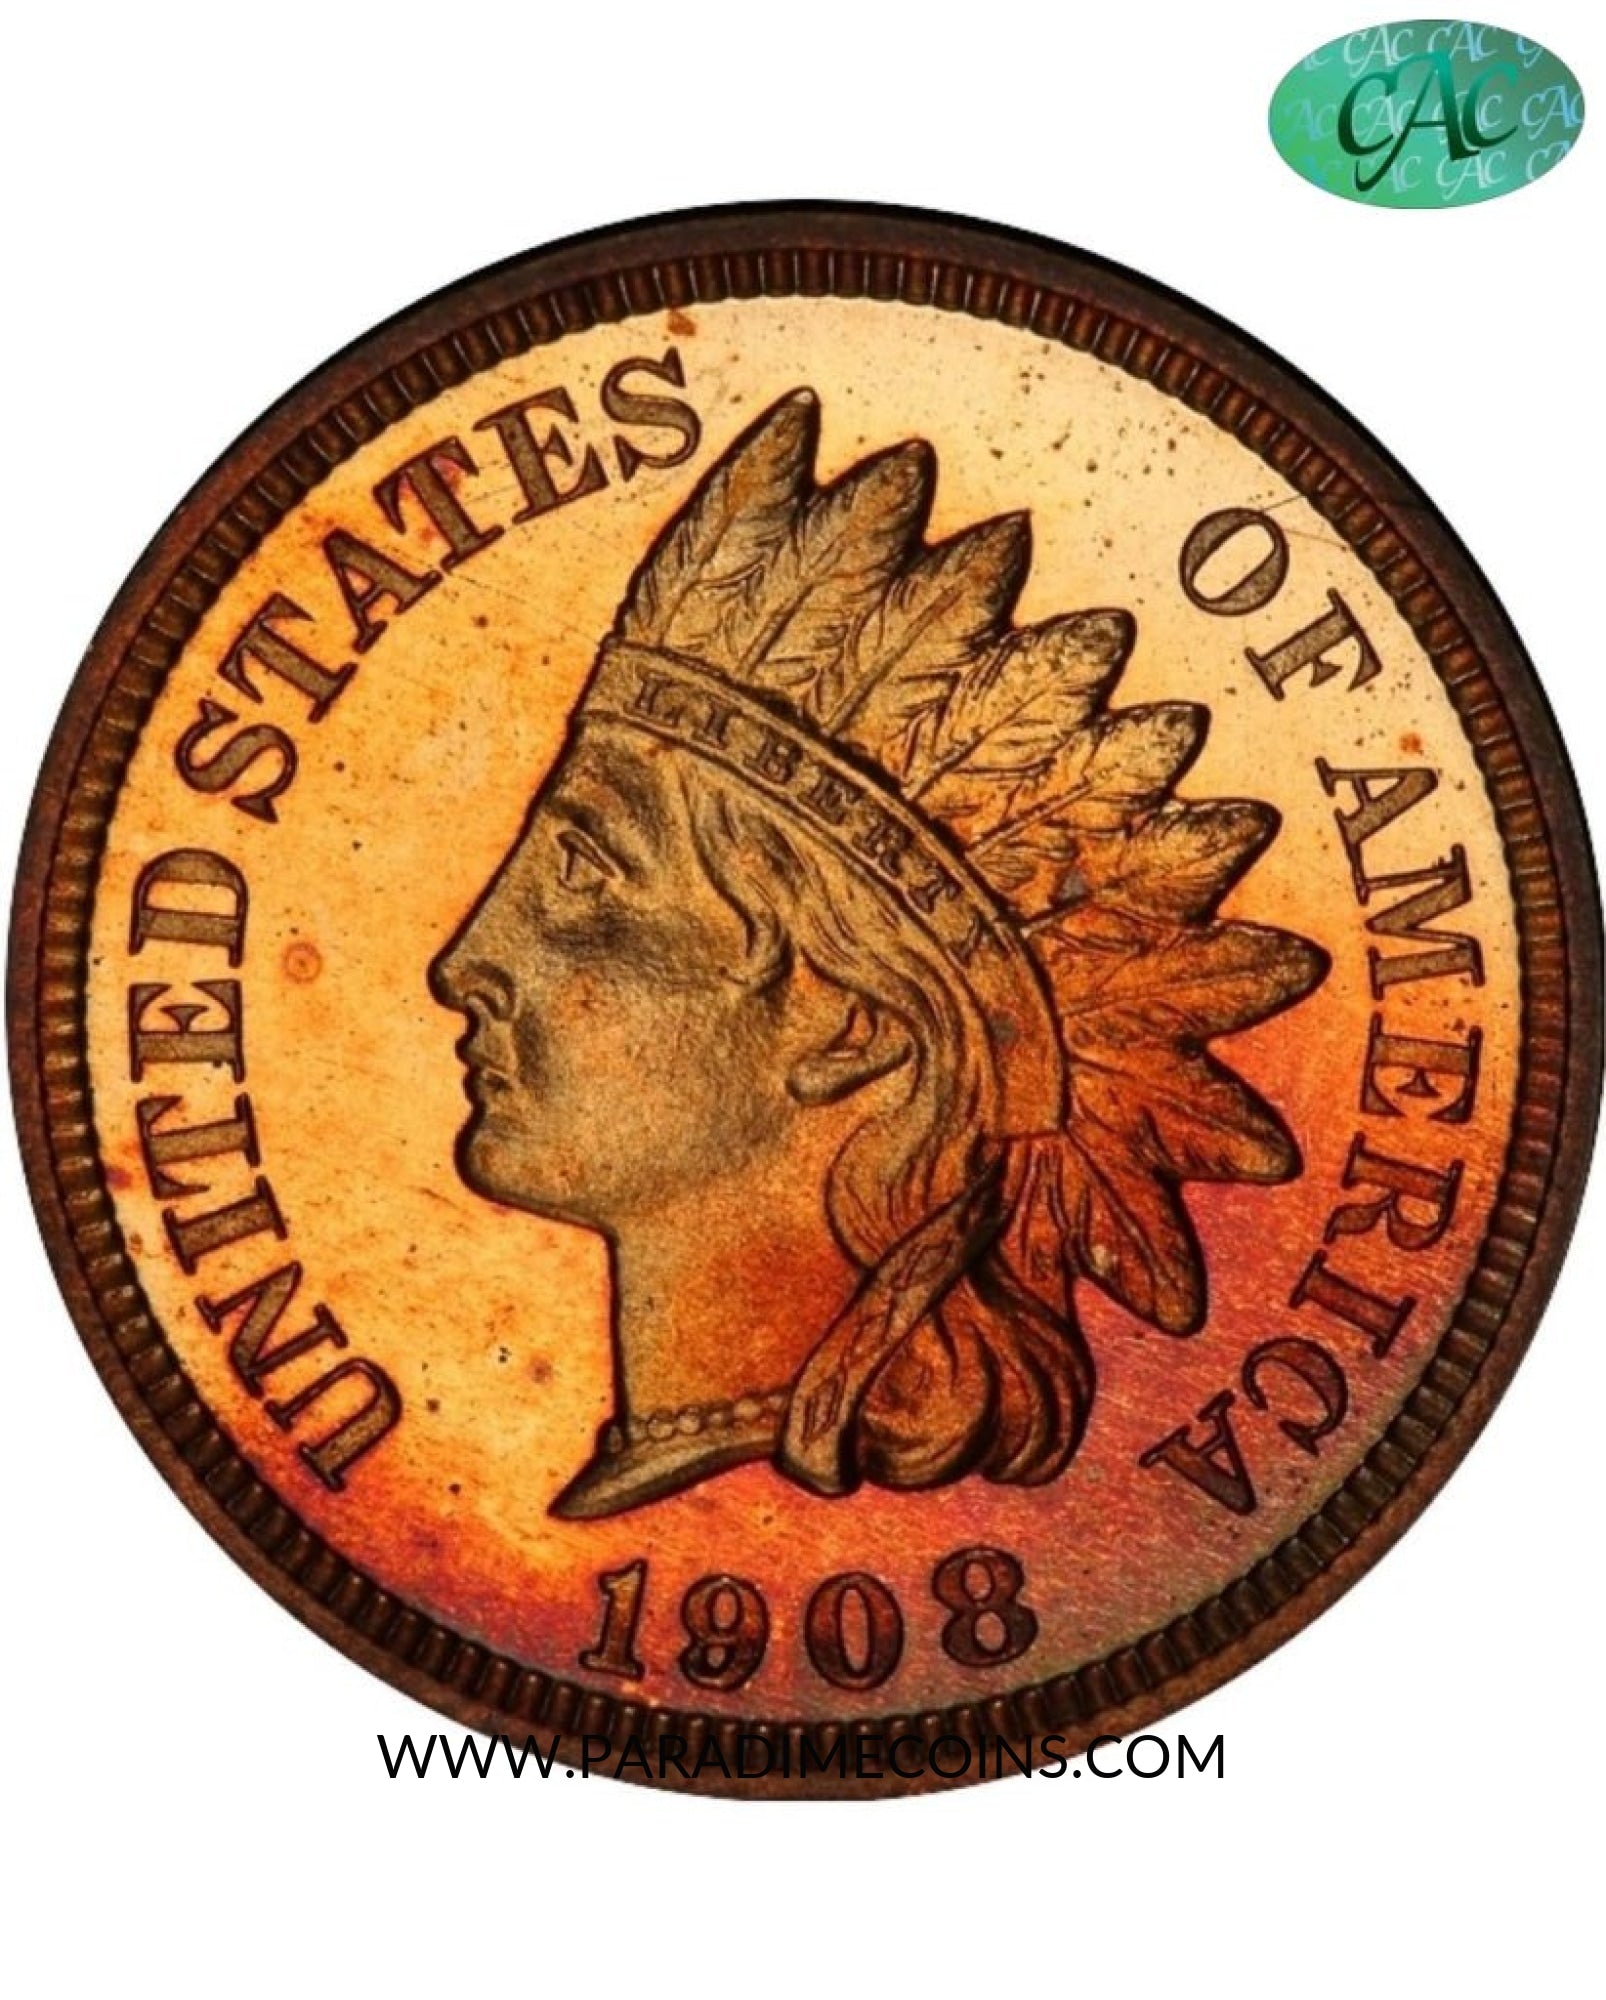 1908 1C PR66RD CAM PCGS CAC EEPS - Paradime Coins | PCGS NGC CACG CAC Rare US Numismatic Coins For Sale